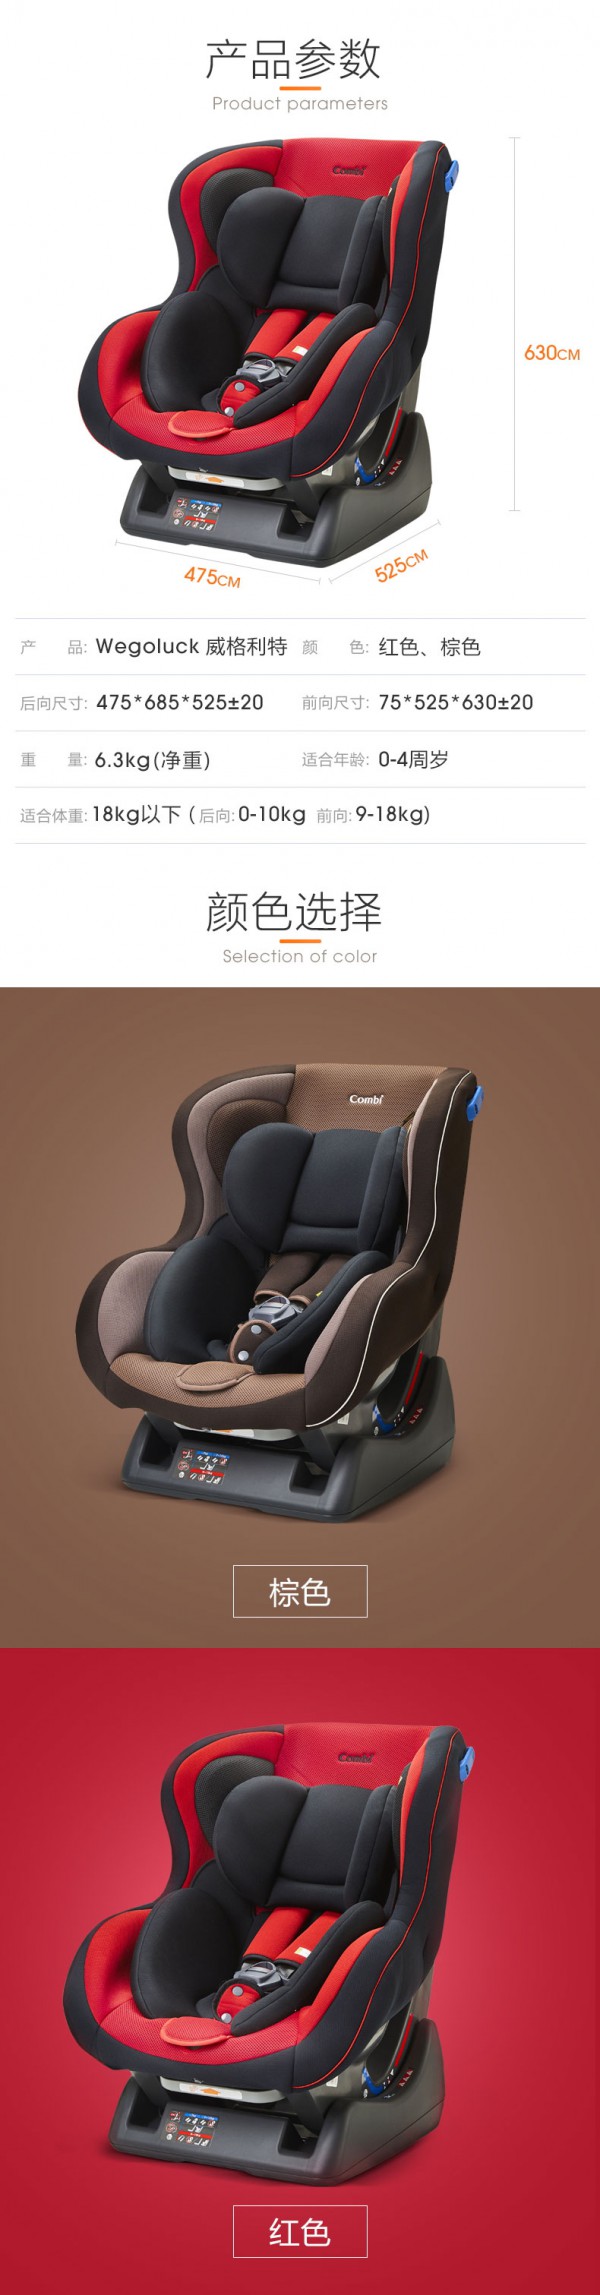 Combi康贝0-4岁宝宝威格利特安全座椅   给宝宝长时间守护